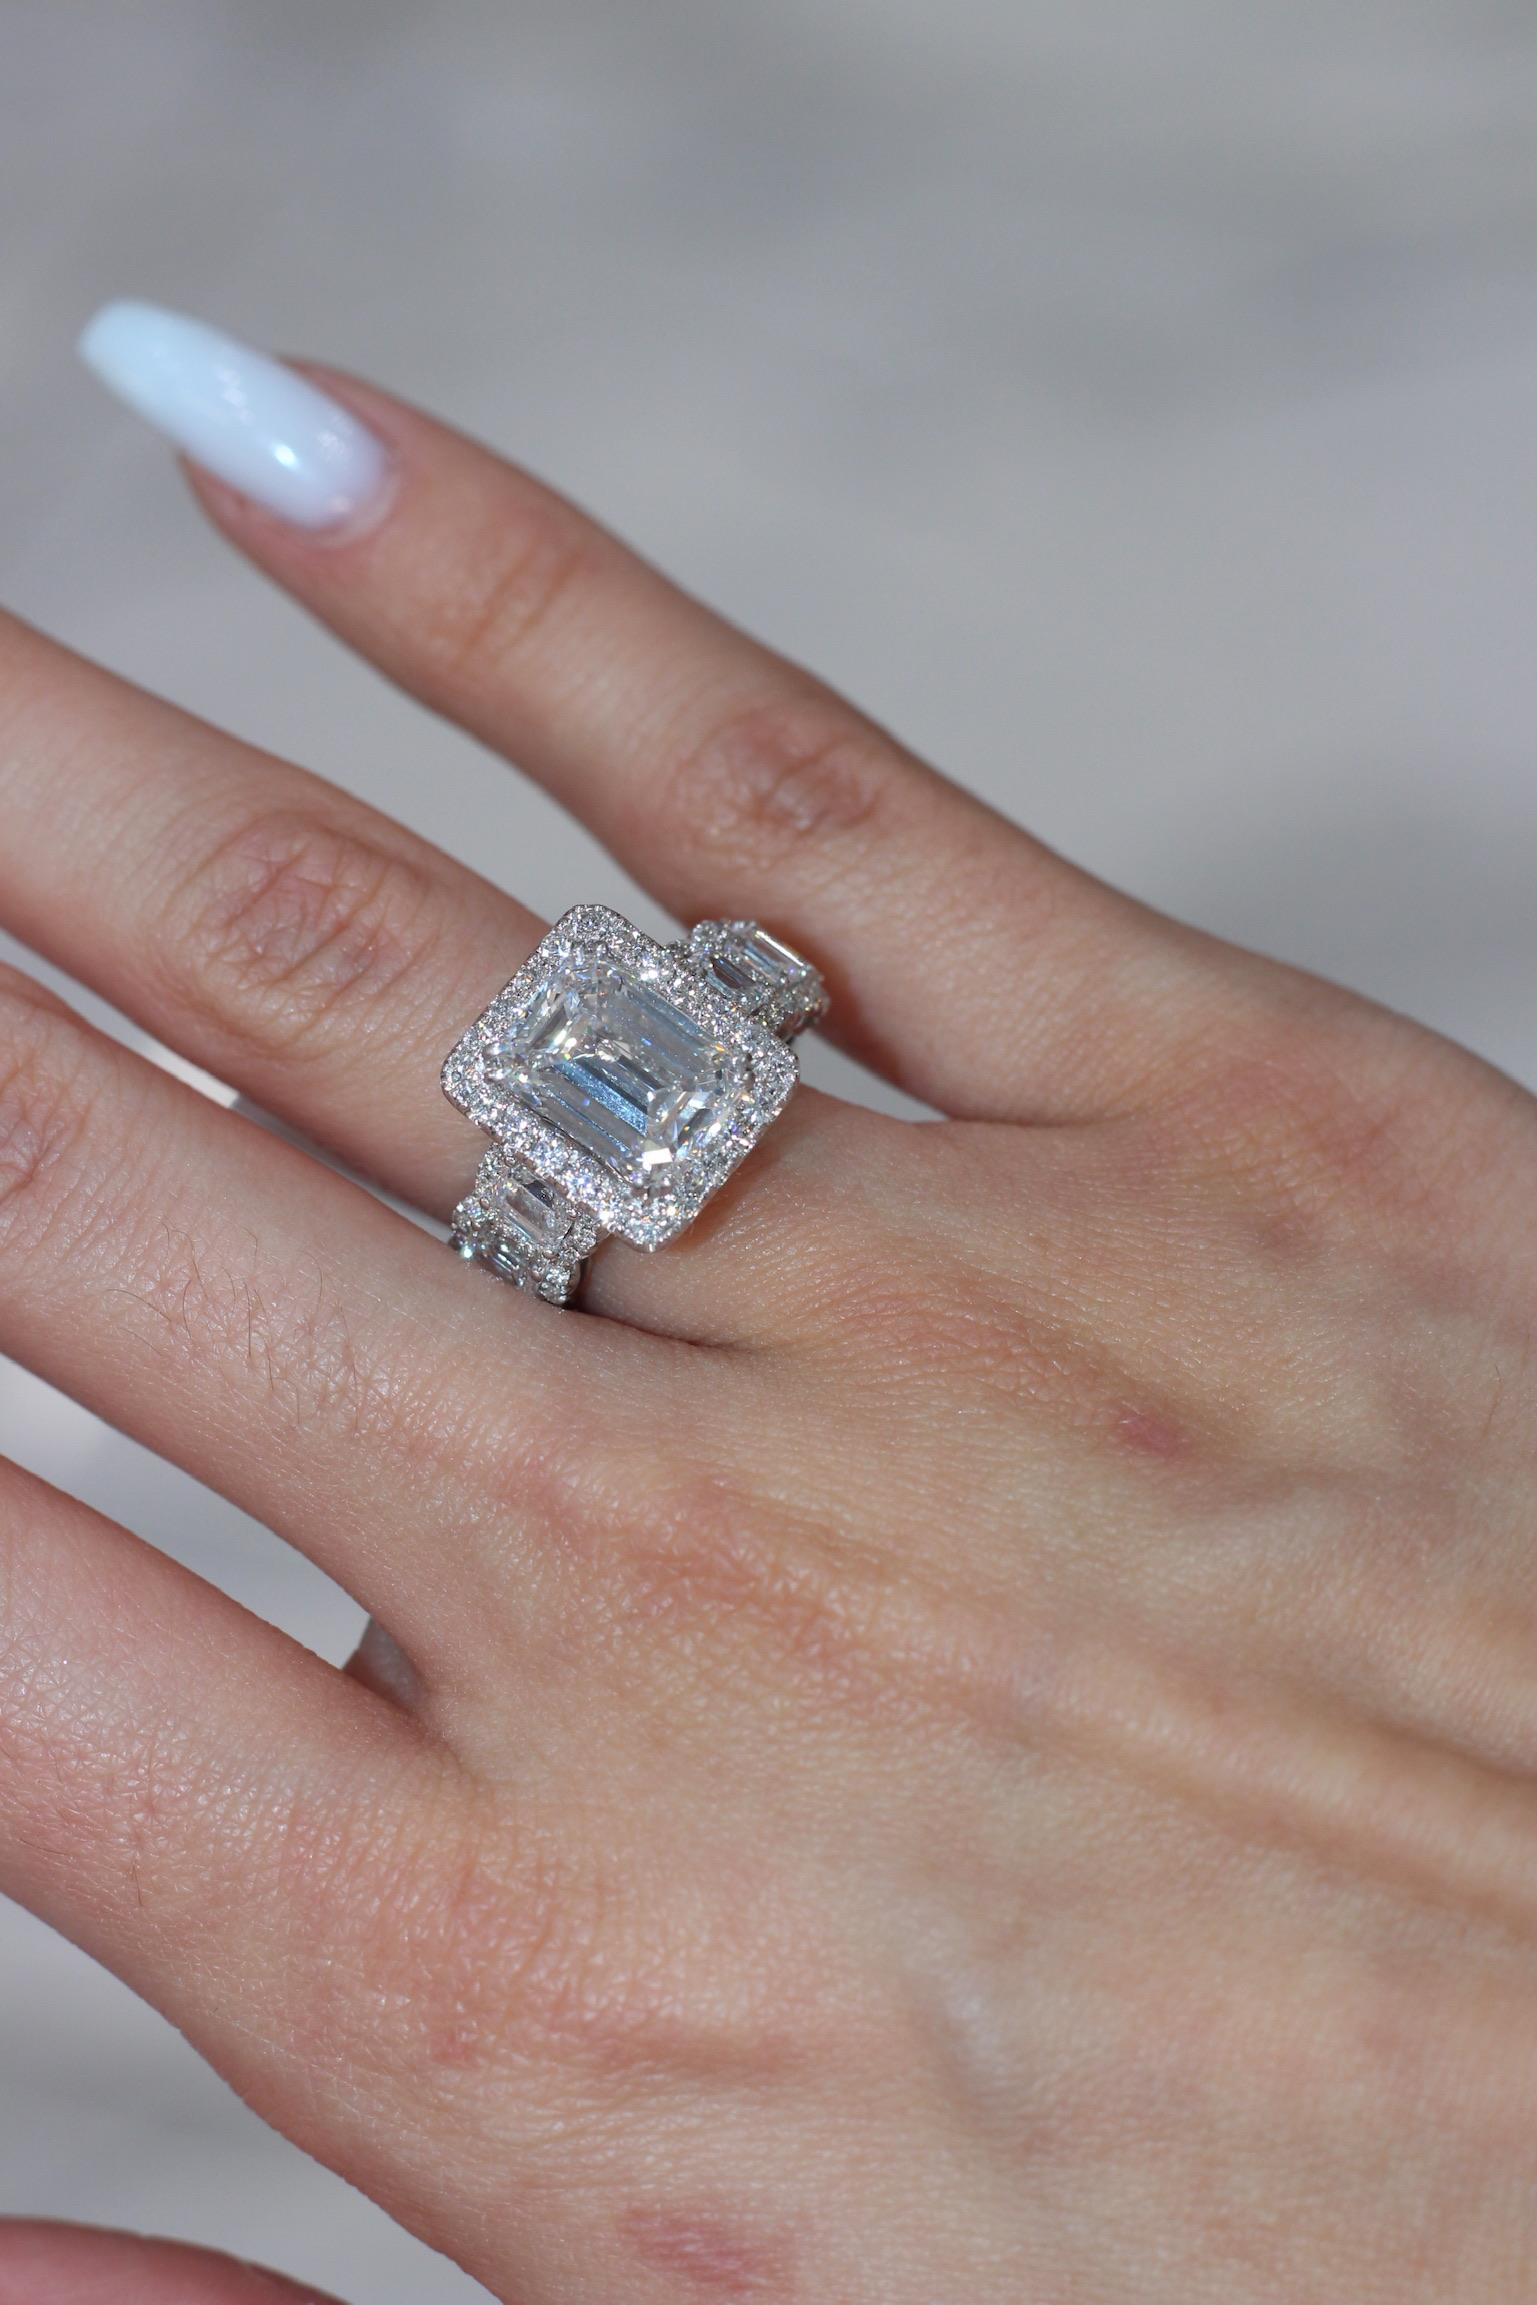 7 carat emerald cut diamond ring price